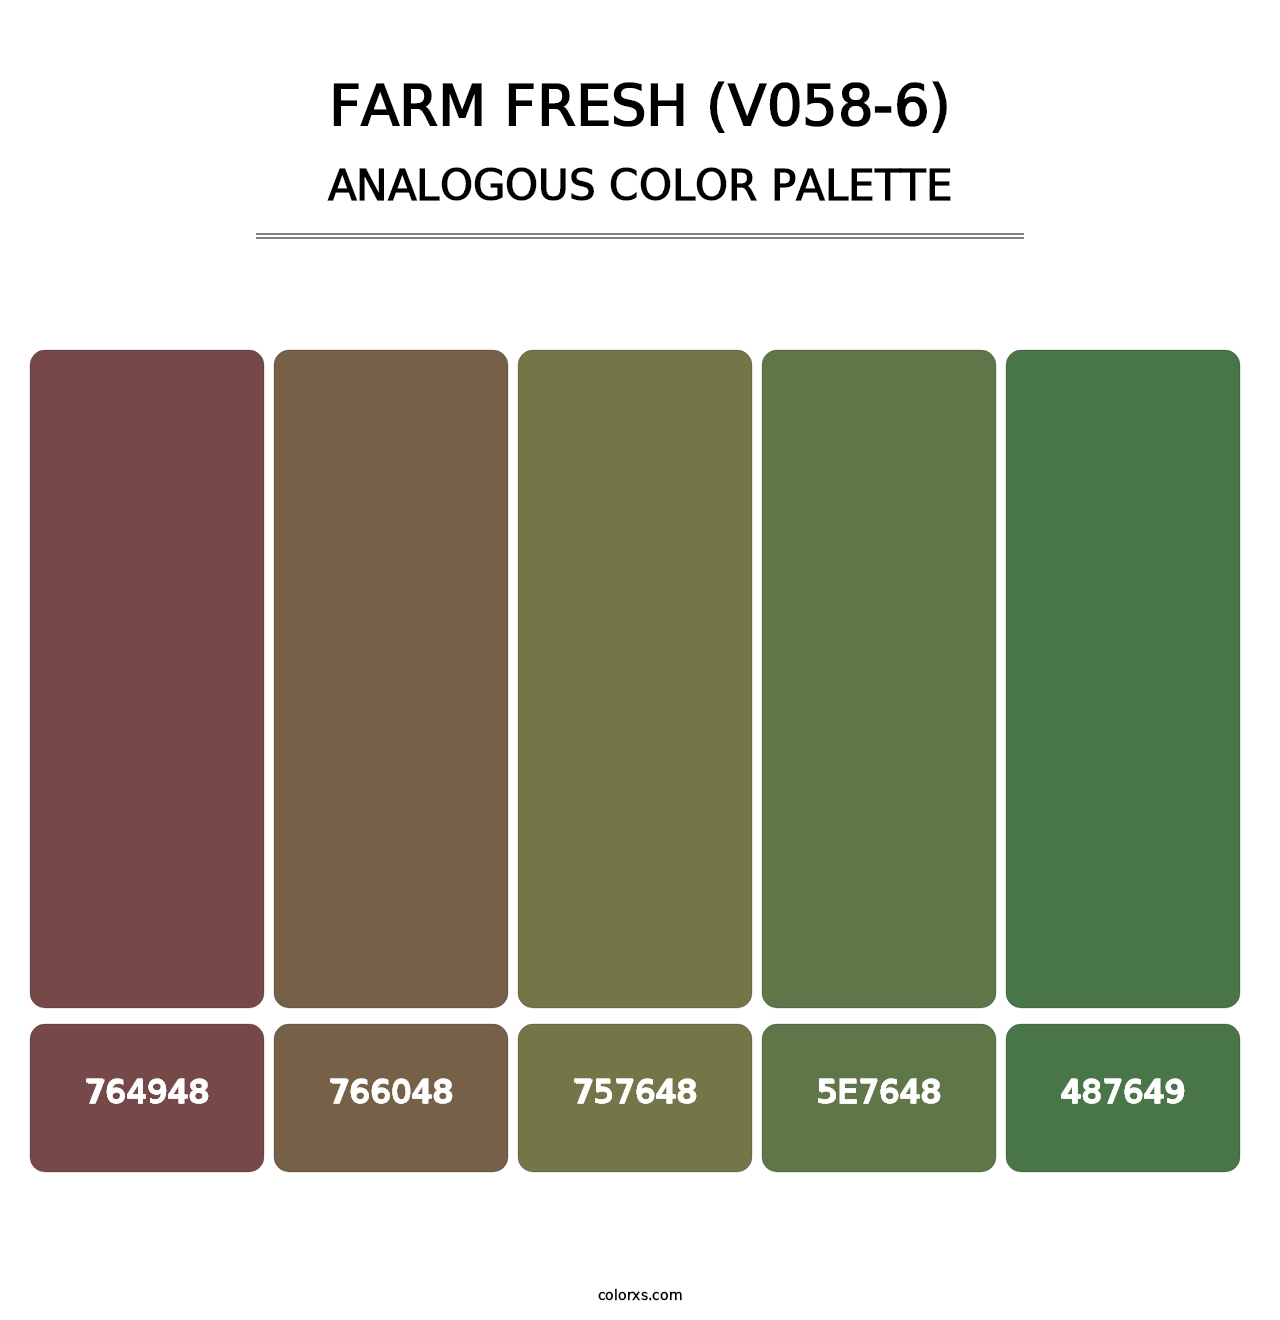 Farm Fresh (V058-6) - Analogous Color Palette